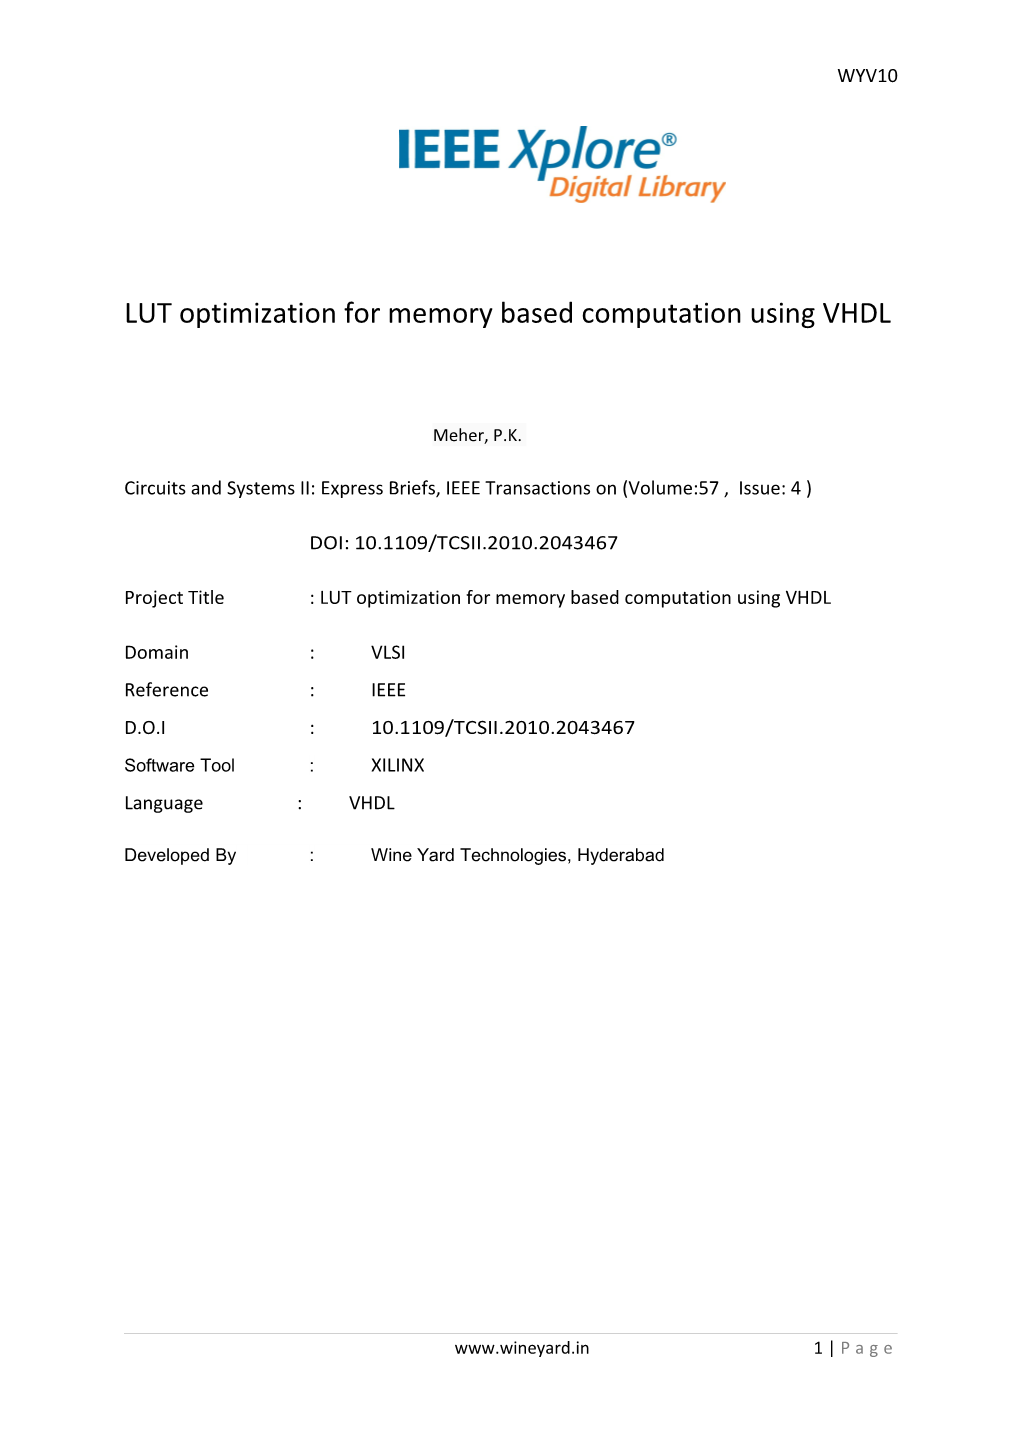 LUT Optimization for Memory Based Computationusing VHDL